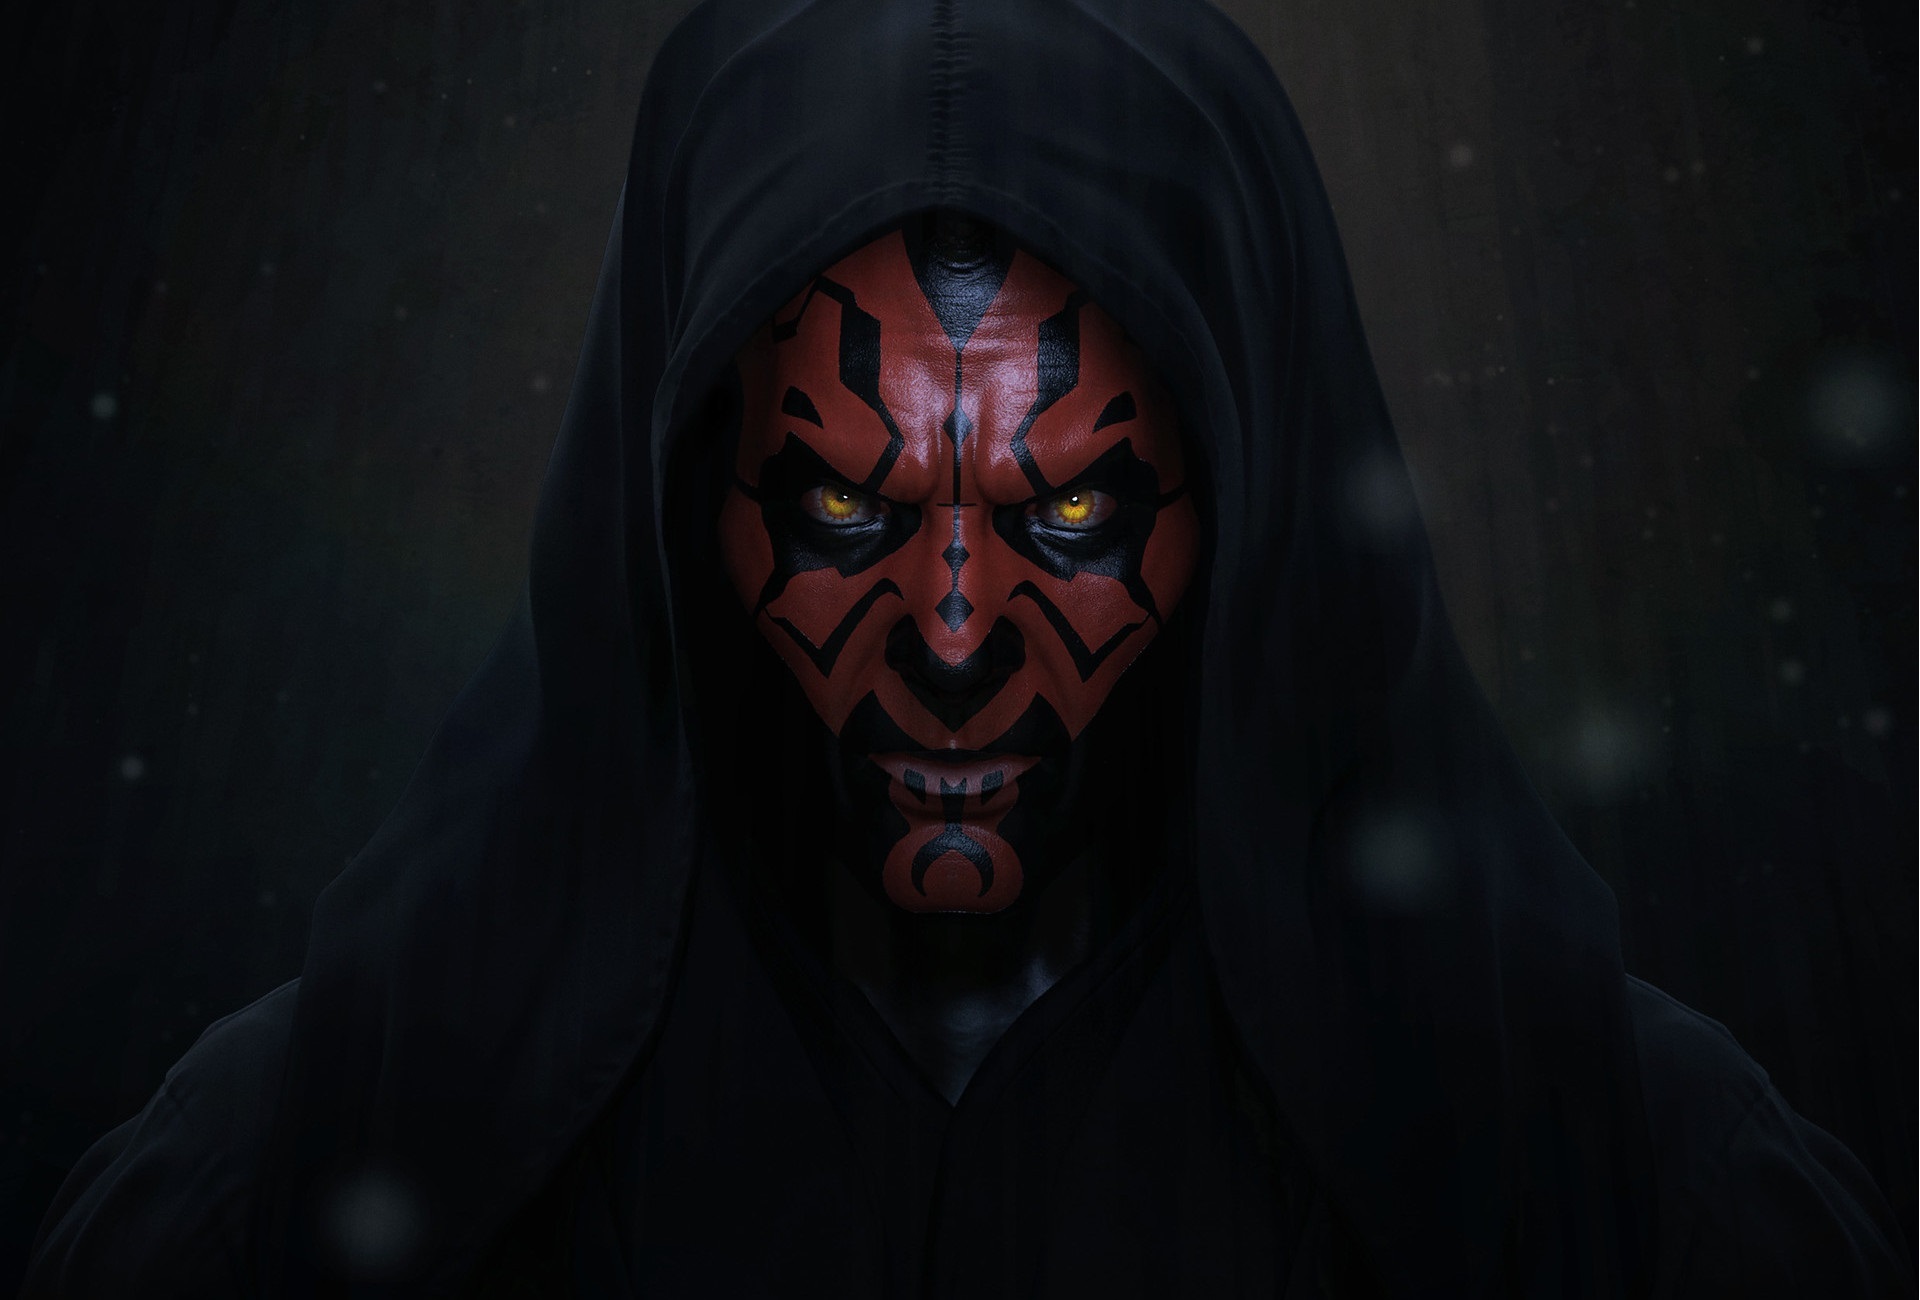 Movie Star Wars Episode I: The Phantom Menace HD Wallpaper | Background Image